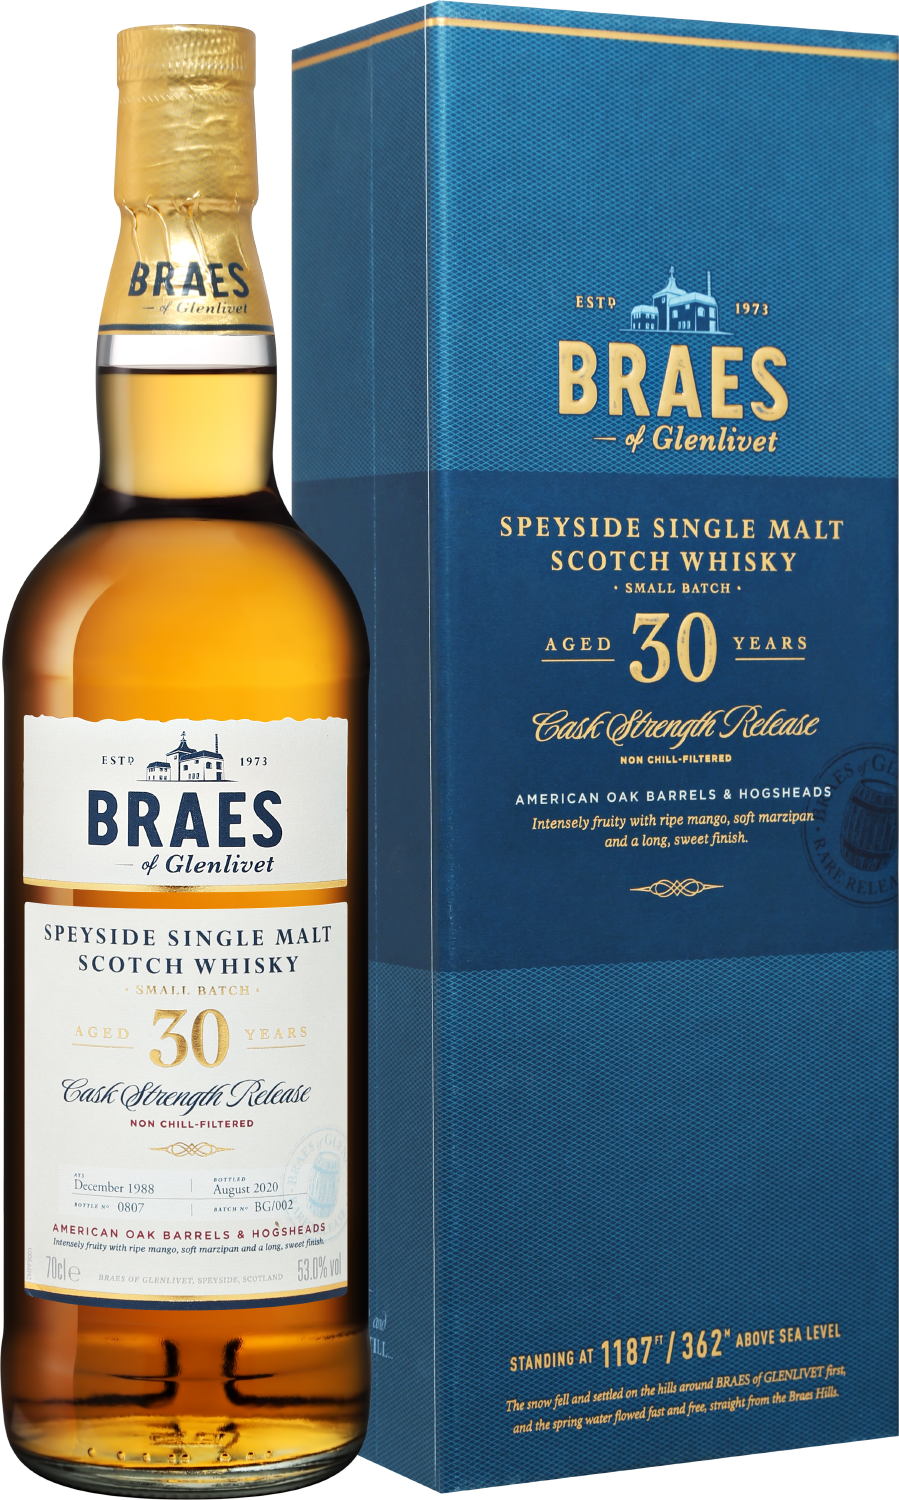 Braes of Glenlivet Speyside Glenlivet Small Batch Single Malt Scotch Whisky 30 y.o. (gift box)